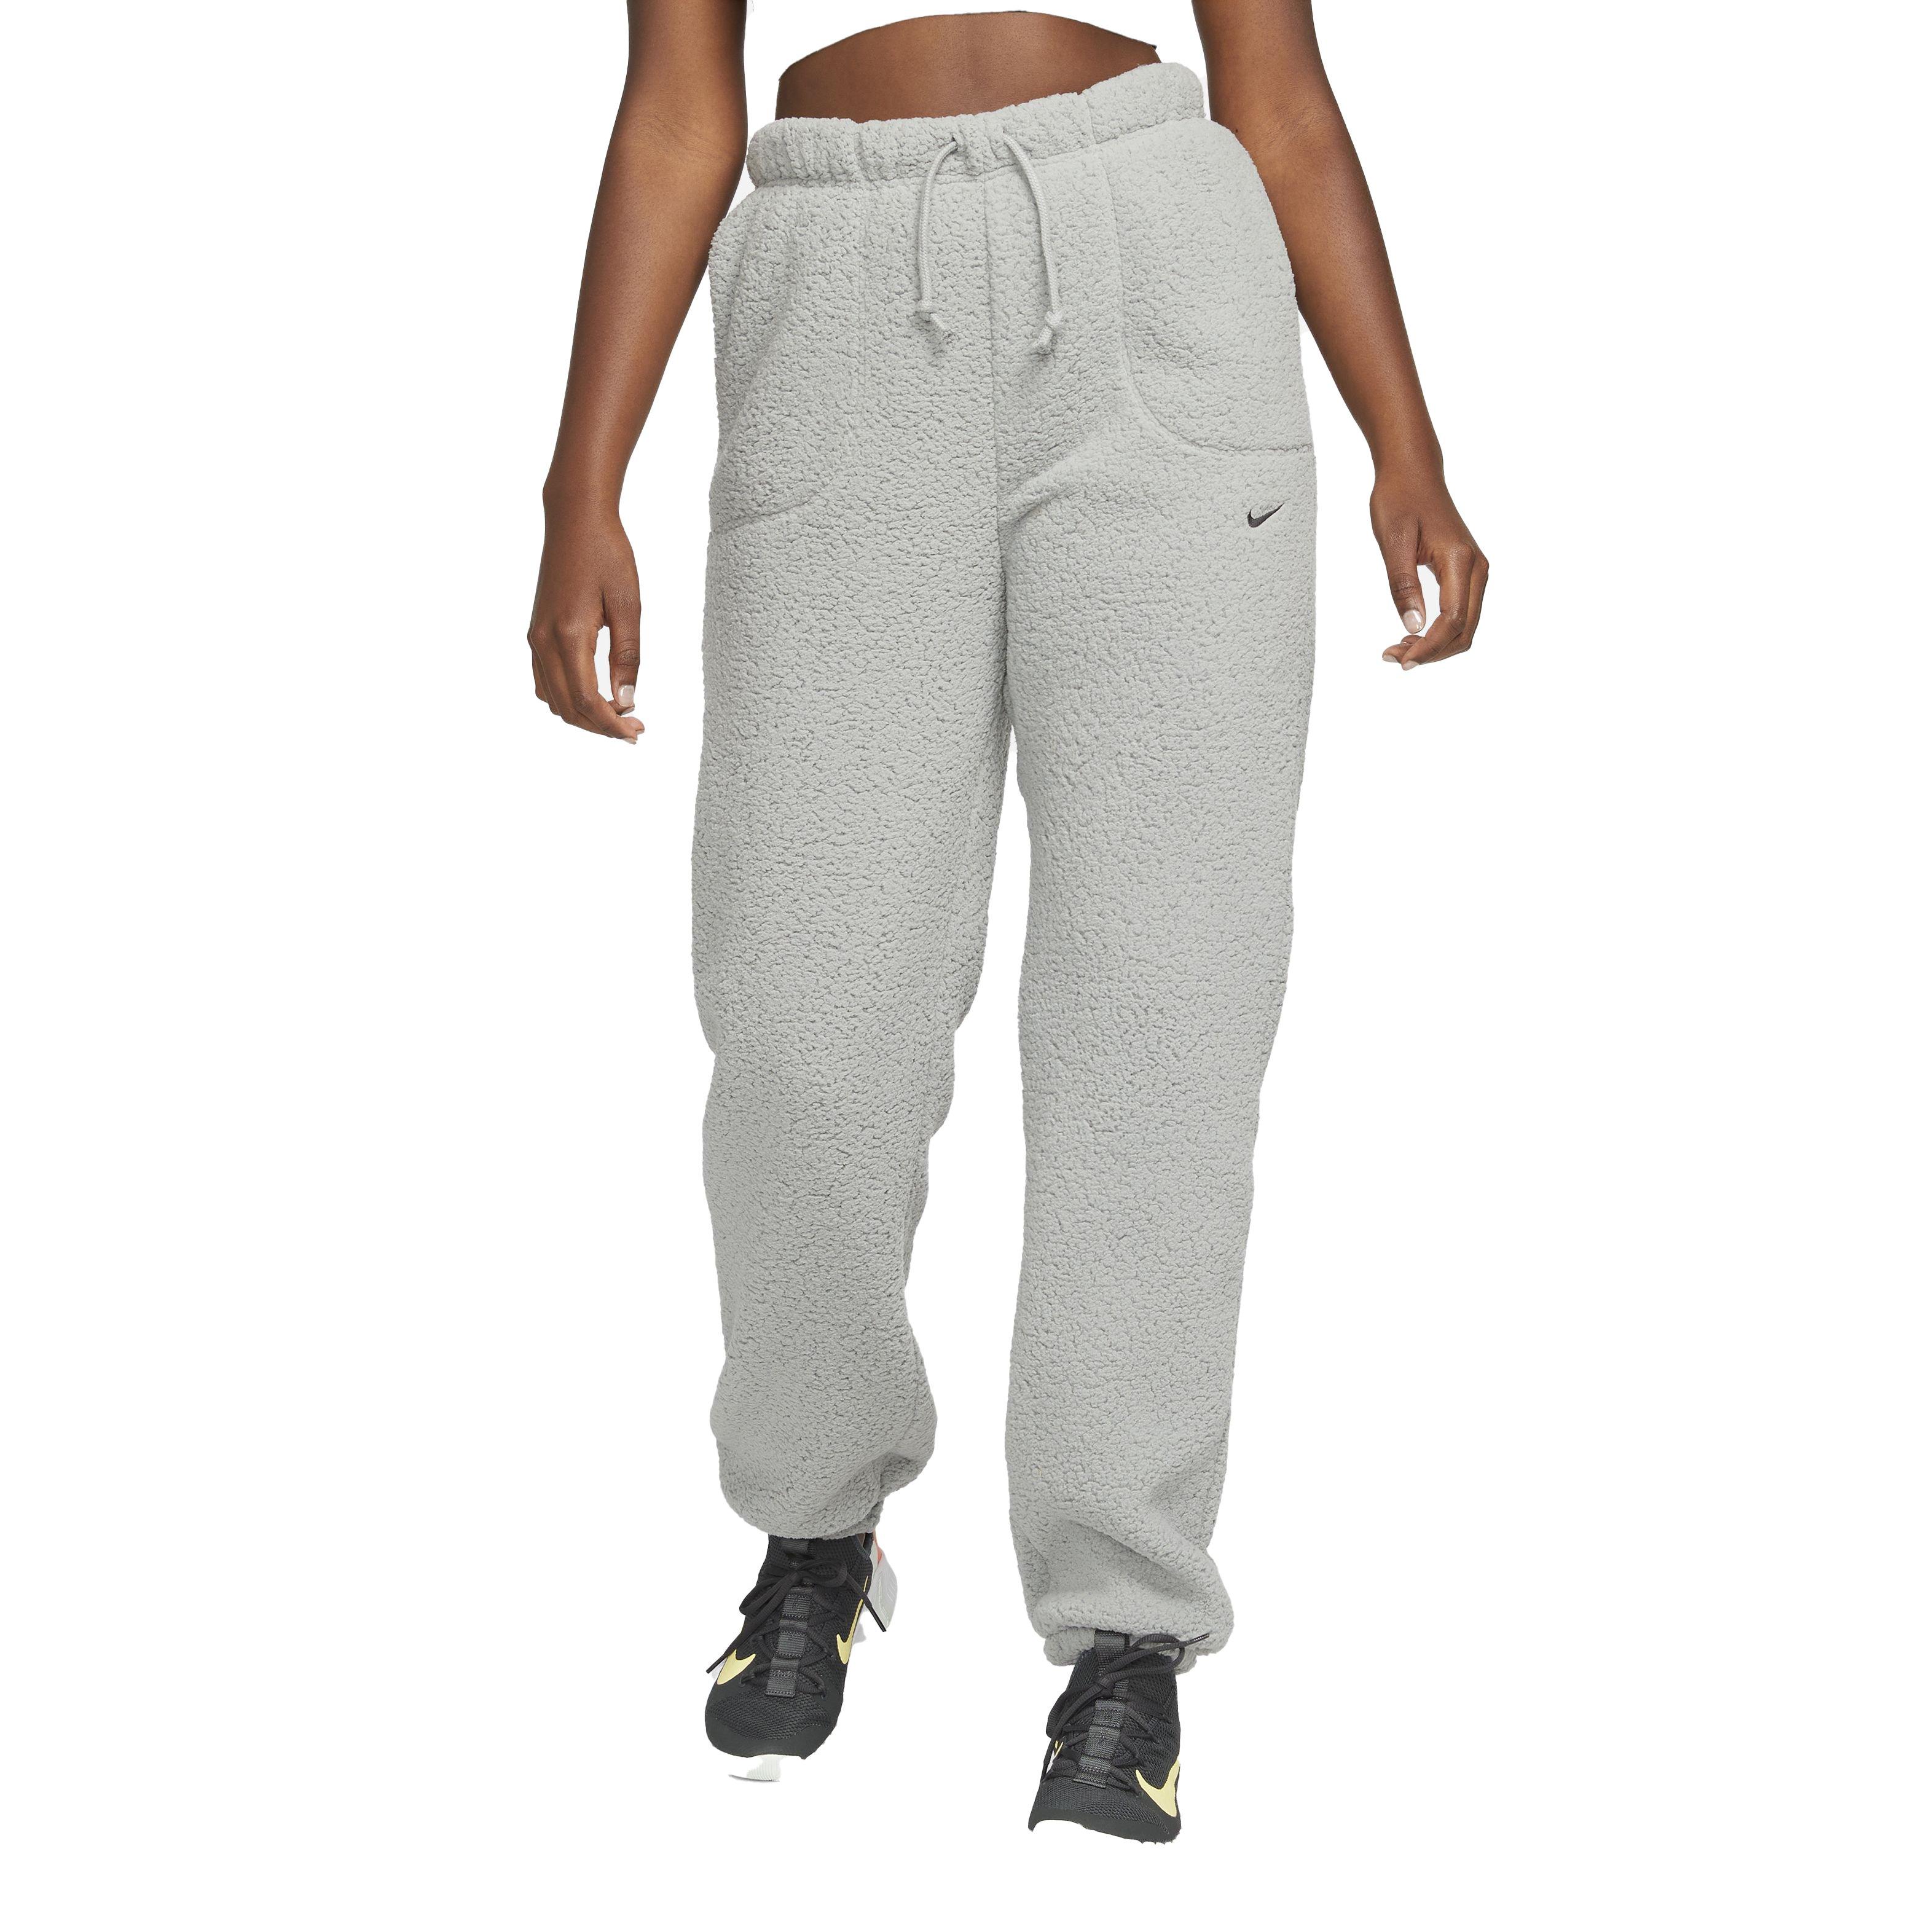 Nike Womens Therma Fit Green Training Pants Size XS, M, XL